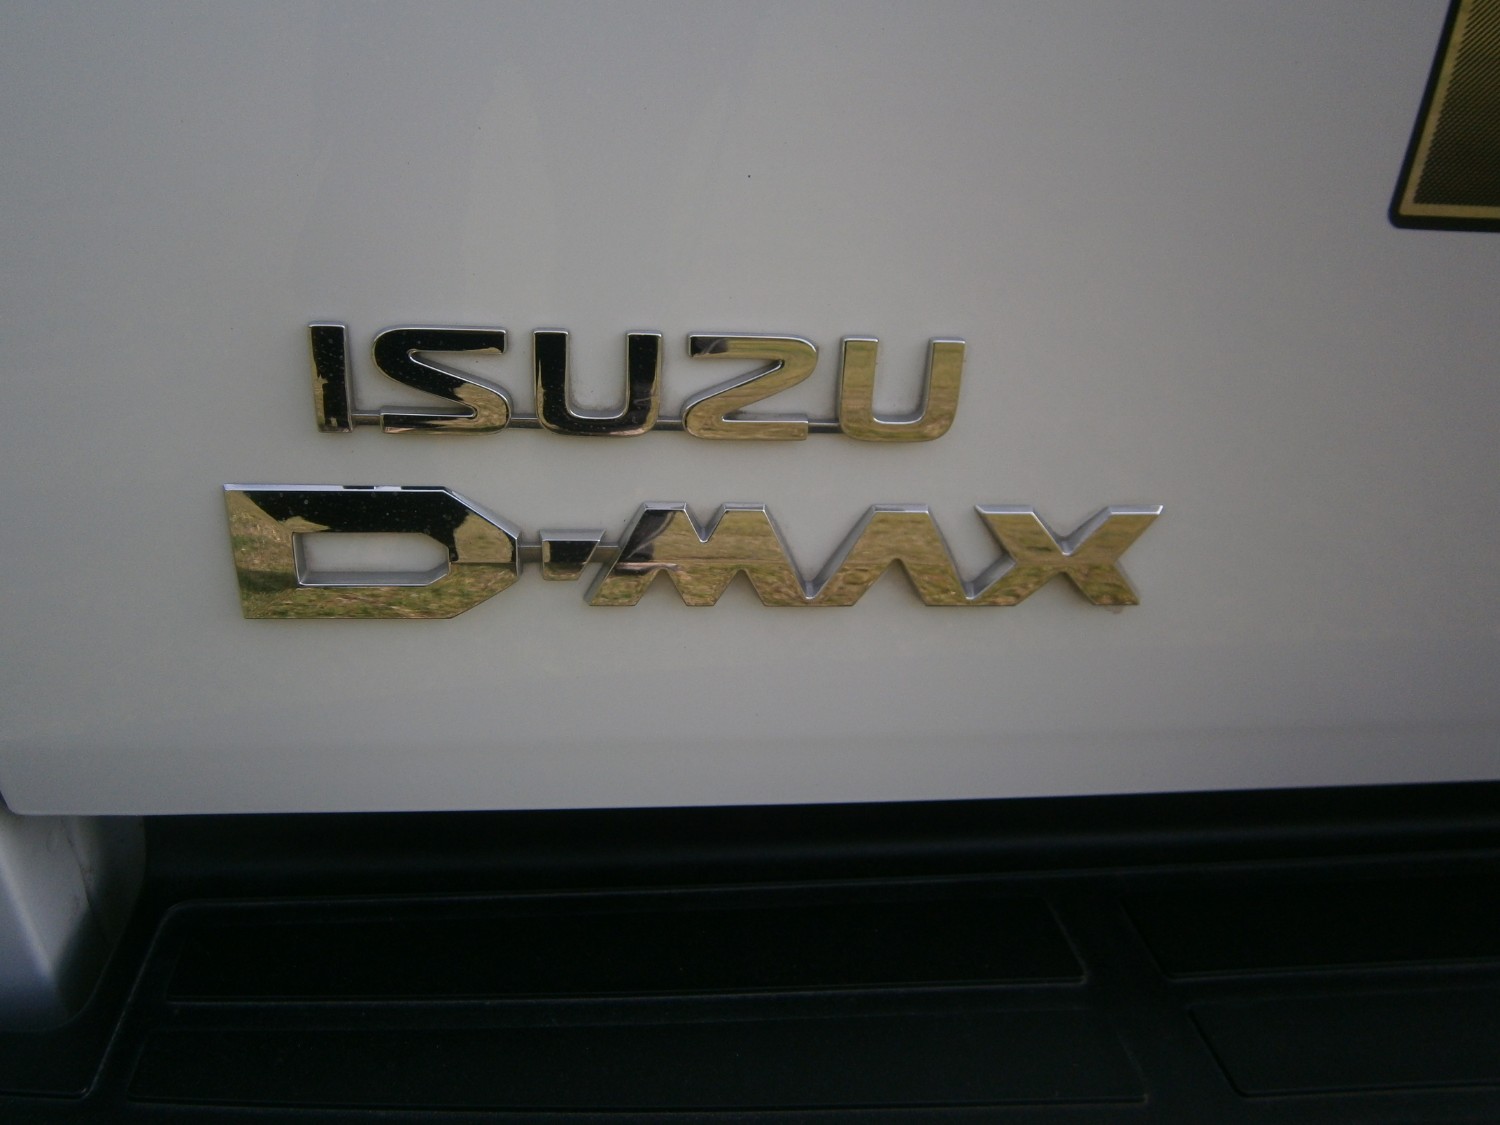 2018 Isuzu Ute D-MAX Turbo LS-T High Ride Ute Image 7